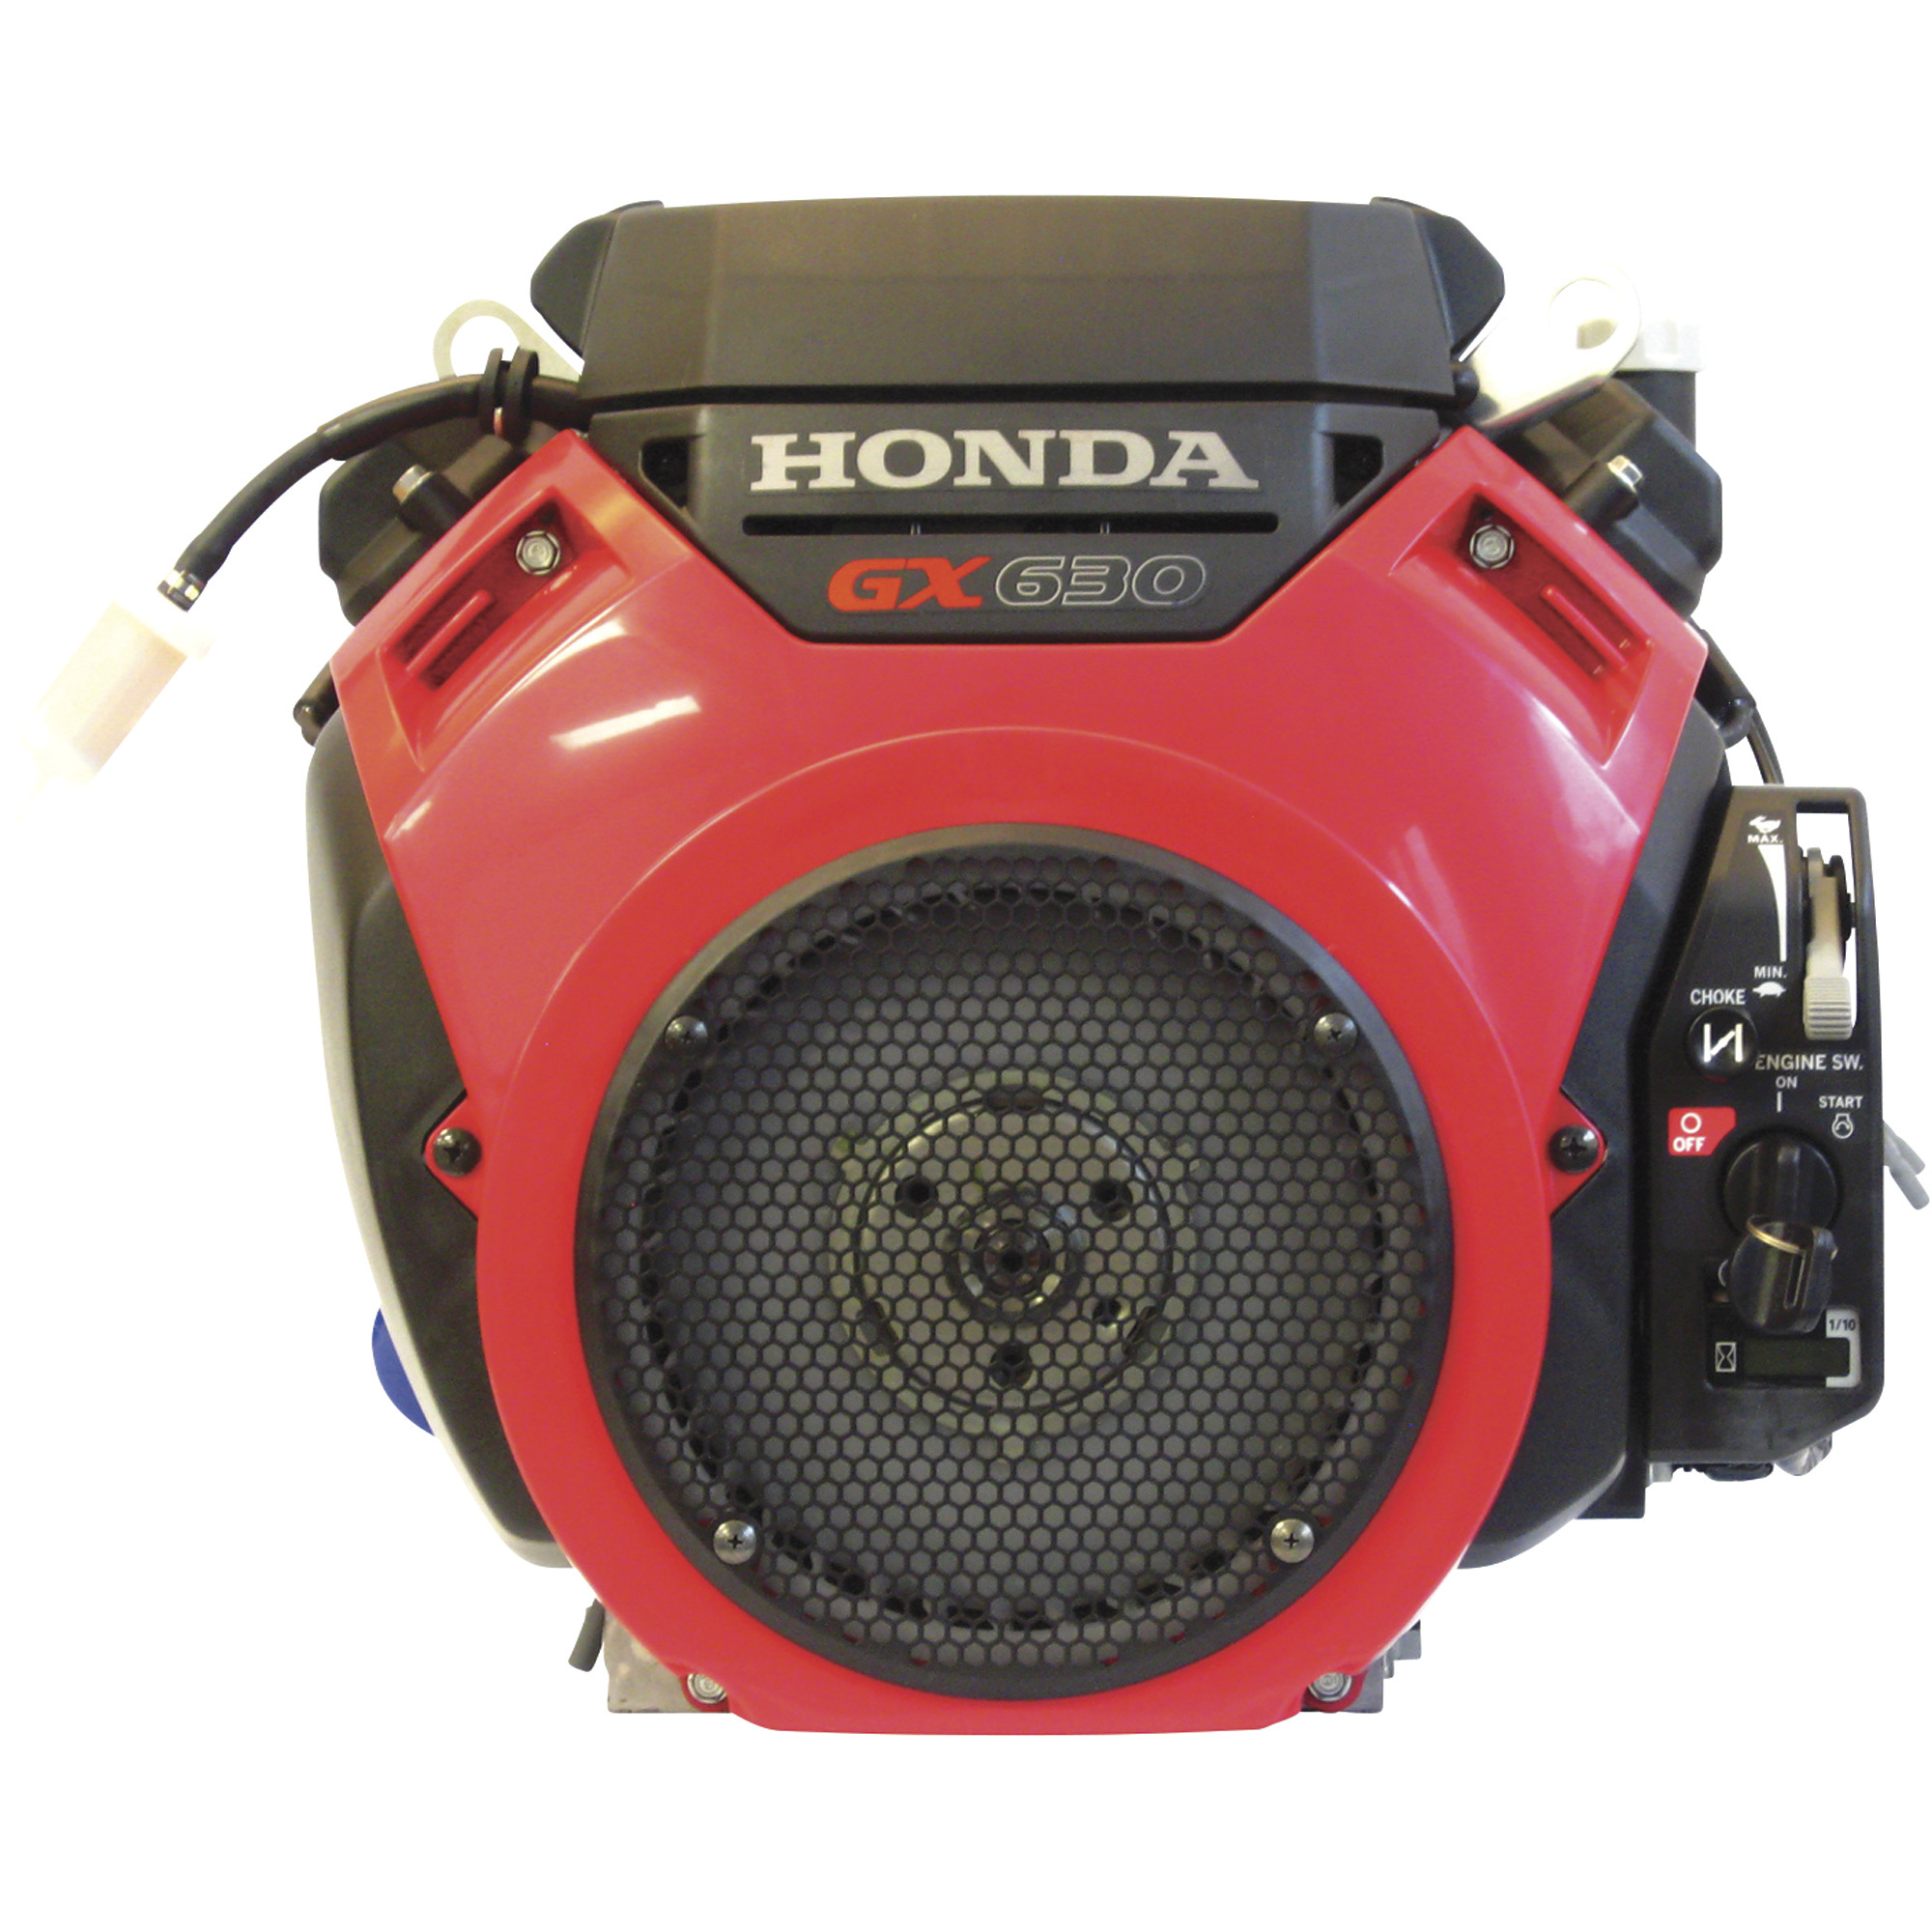 Honda V-Twin Horizontal OHV Engine with Electric Start â 688cc, GX Series, Model GX630RHQZE